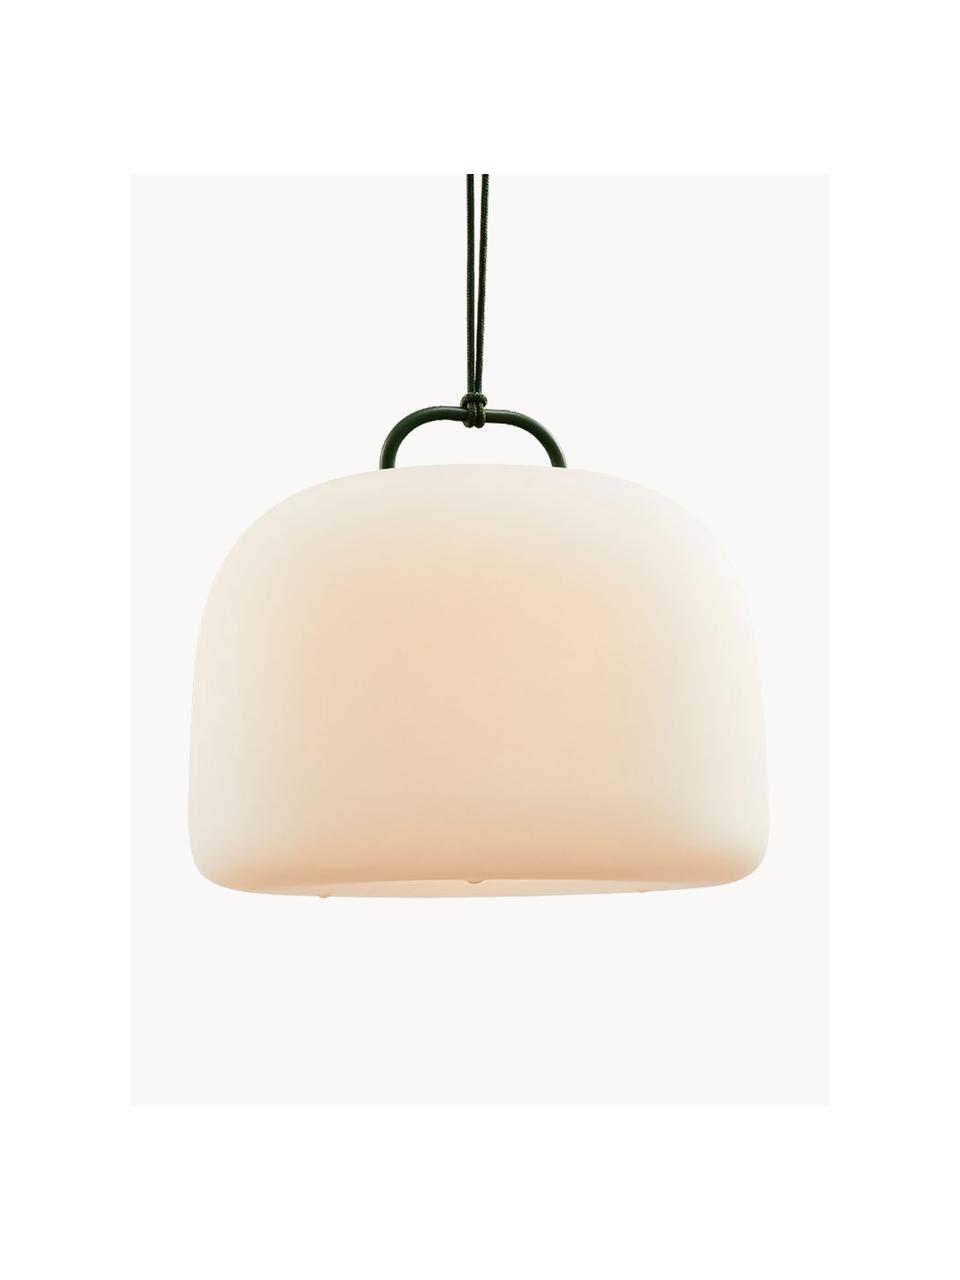 Mobiel outdoor LED hanglamp Kettle, dimbaar, Lamp: kunststof, Crèmewit, donkergroen, Ø 36 x H 31 cm